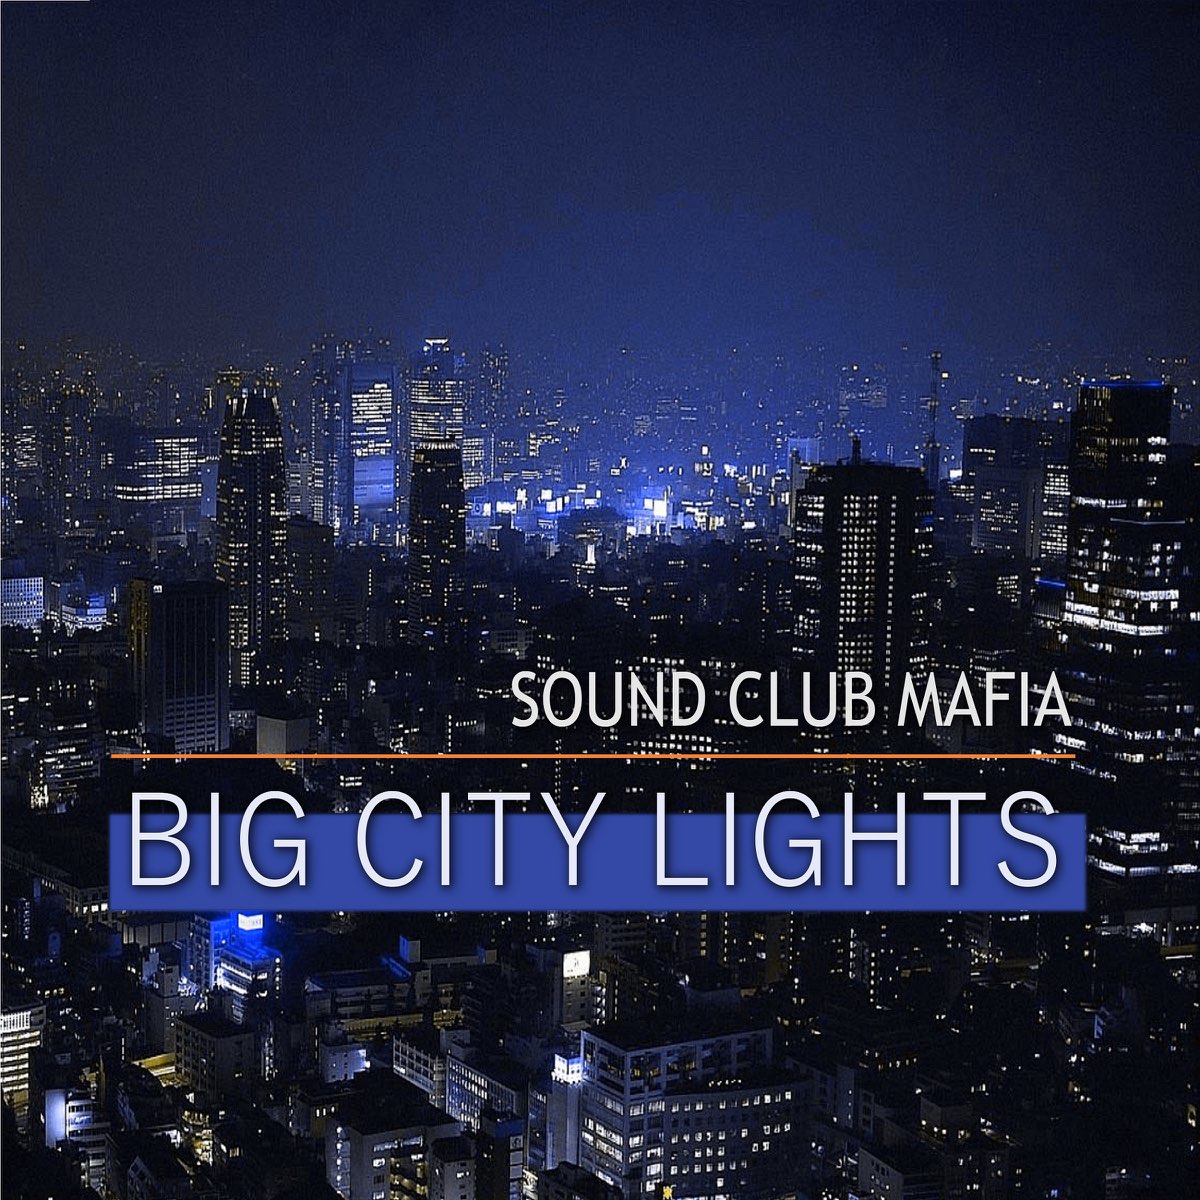 Signal regn leksikon ‎Big City Lights - Single by Sound Club Mafia on Apple Music